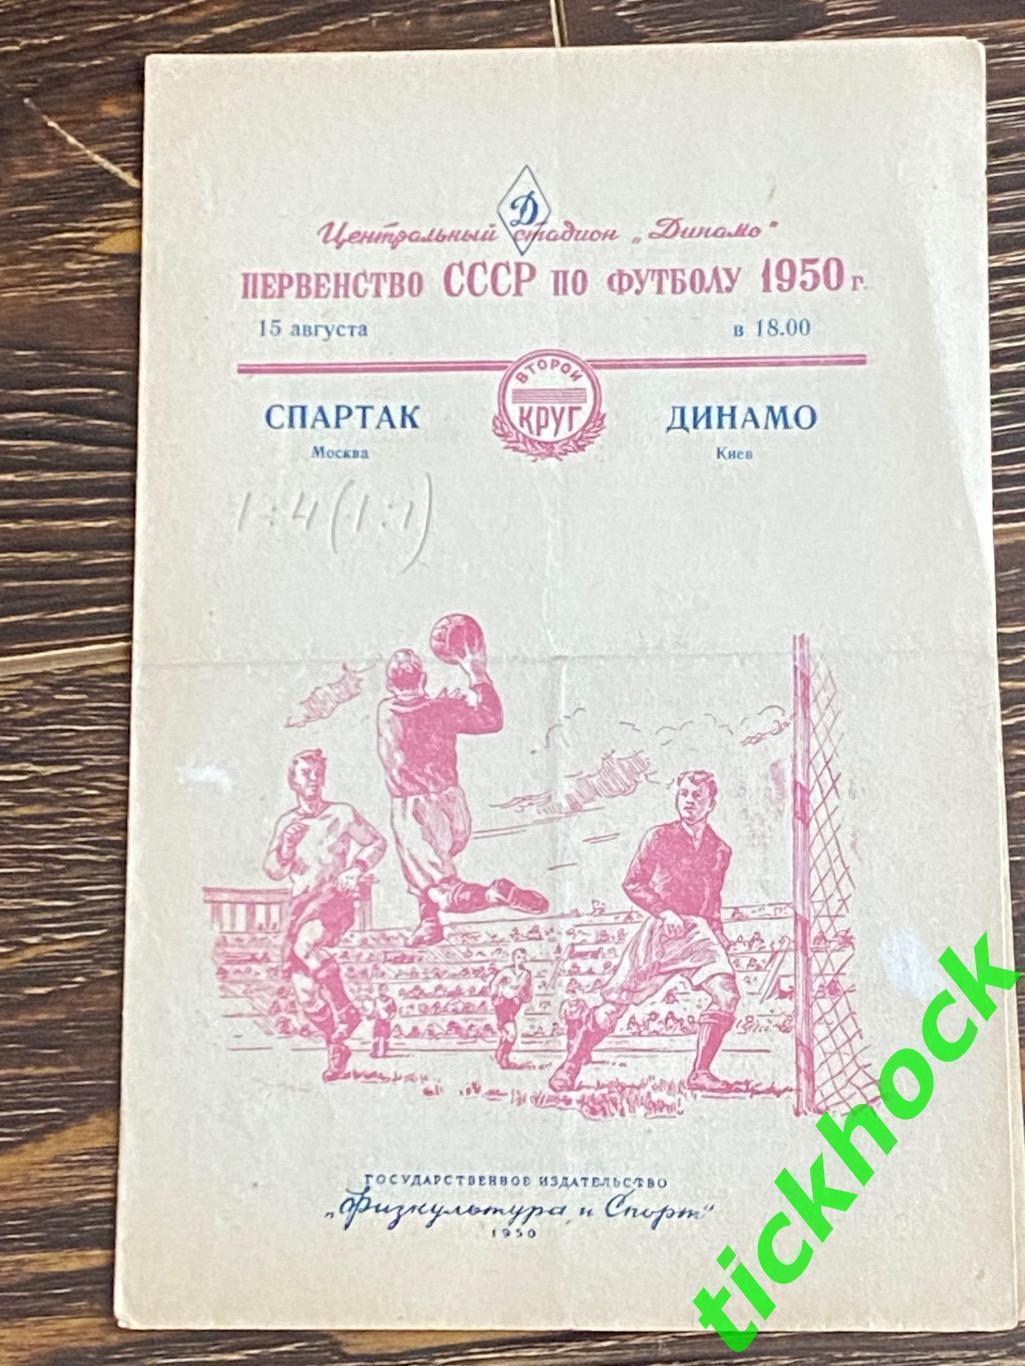 Спартак Москва - Динамо Киев 15.08.1950 _ Первенство СССР